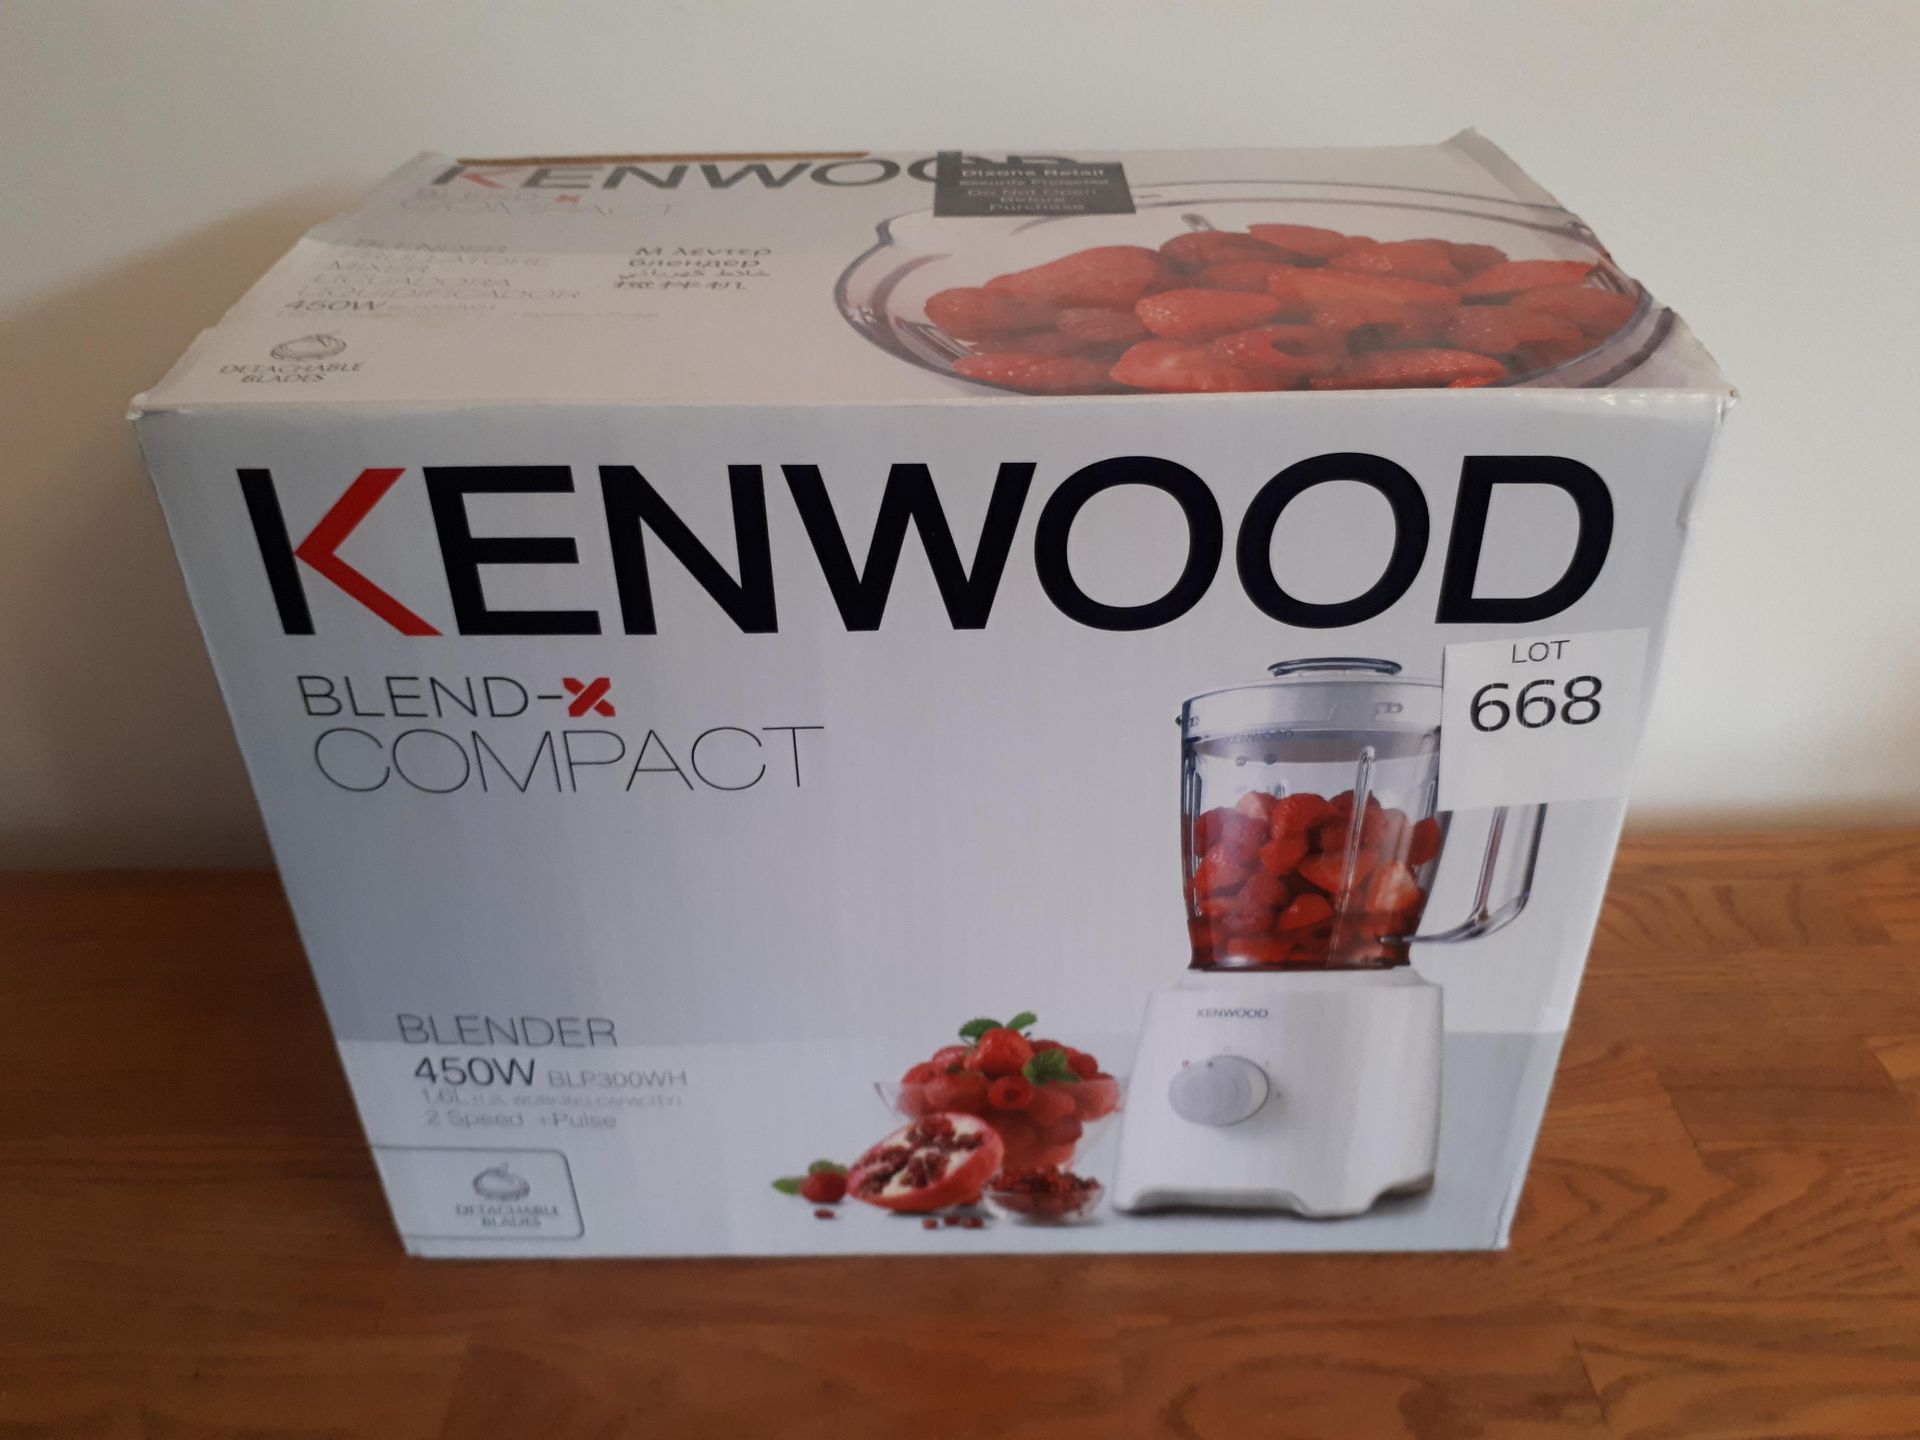 Kenwood BLP300WH Compact Blender, 450w